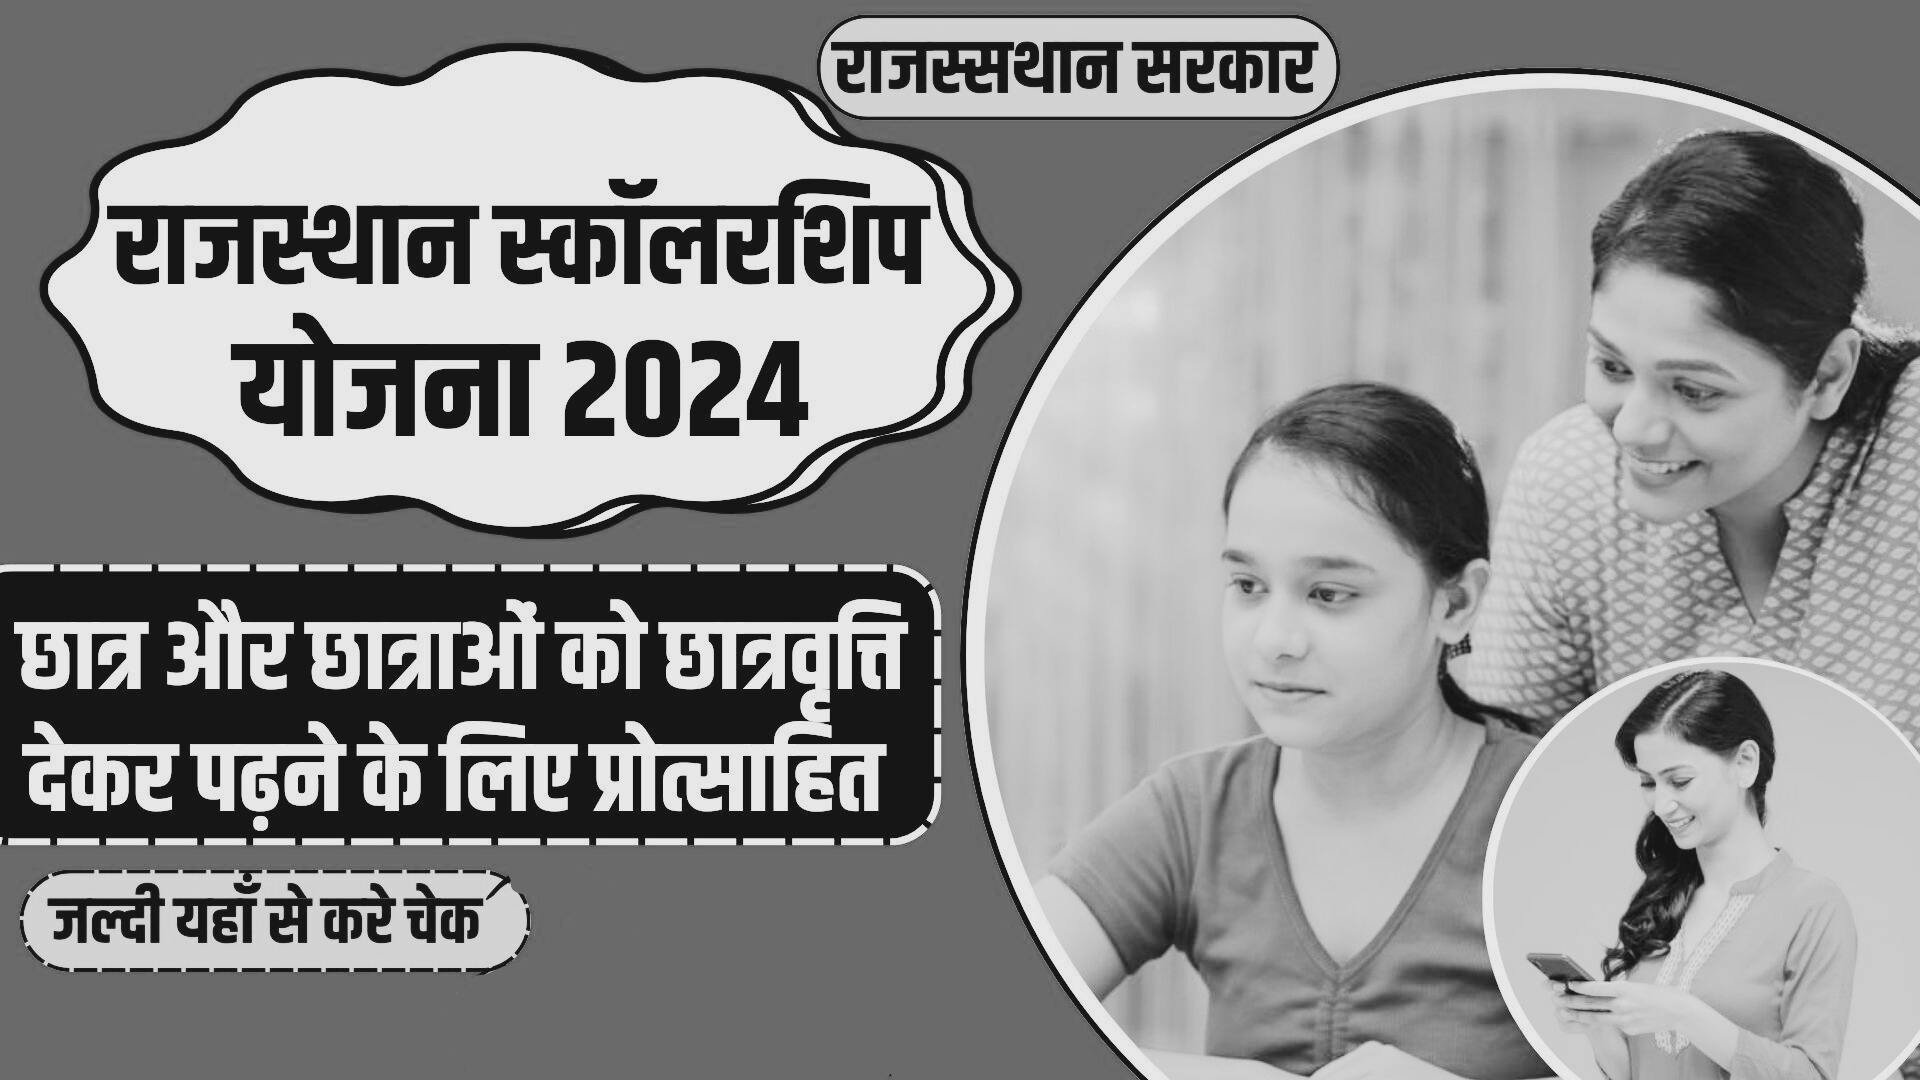 Rajasthan scholarship Yojana 2024 , राजस्थान छात्रवृत्ति योजना 2024 last date , राजस्थान छात्रवृत्ति योजना 2024 , scholarship rajasthan